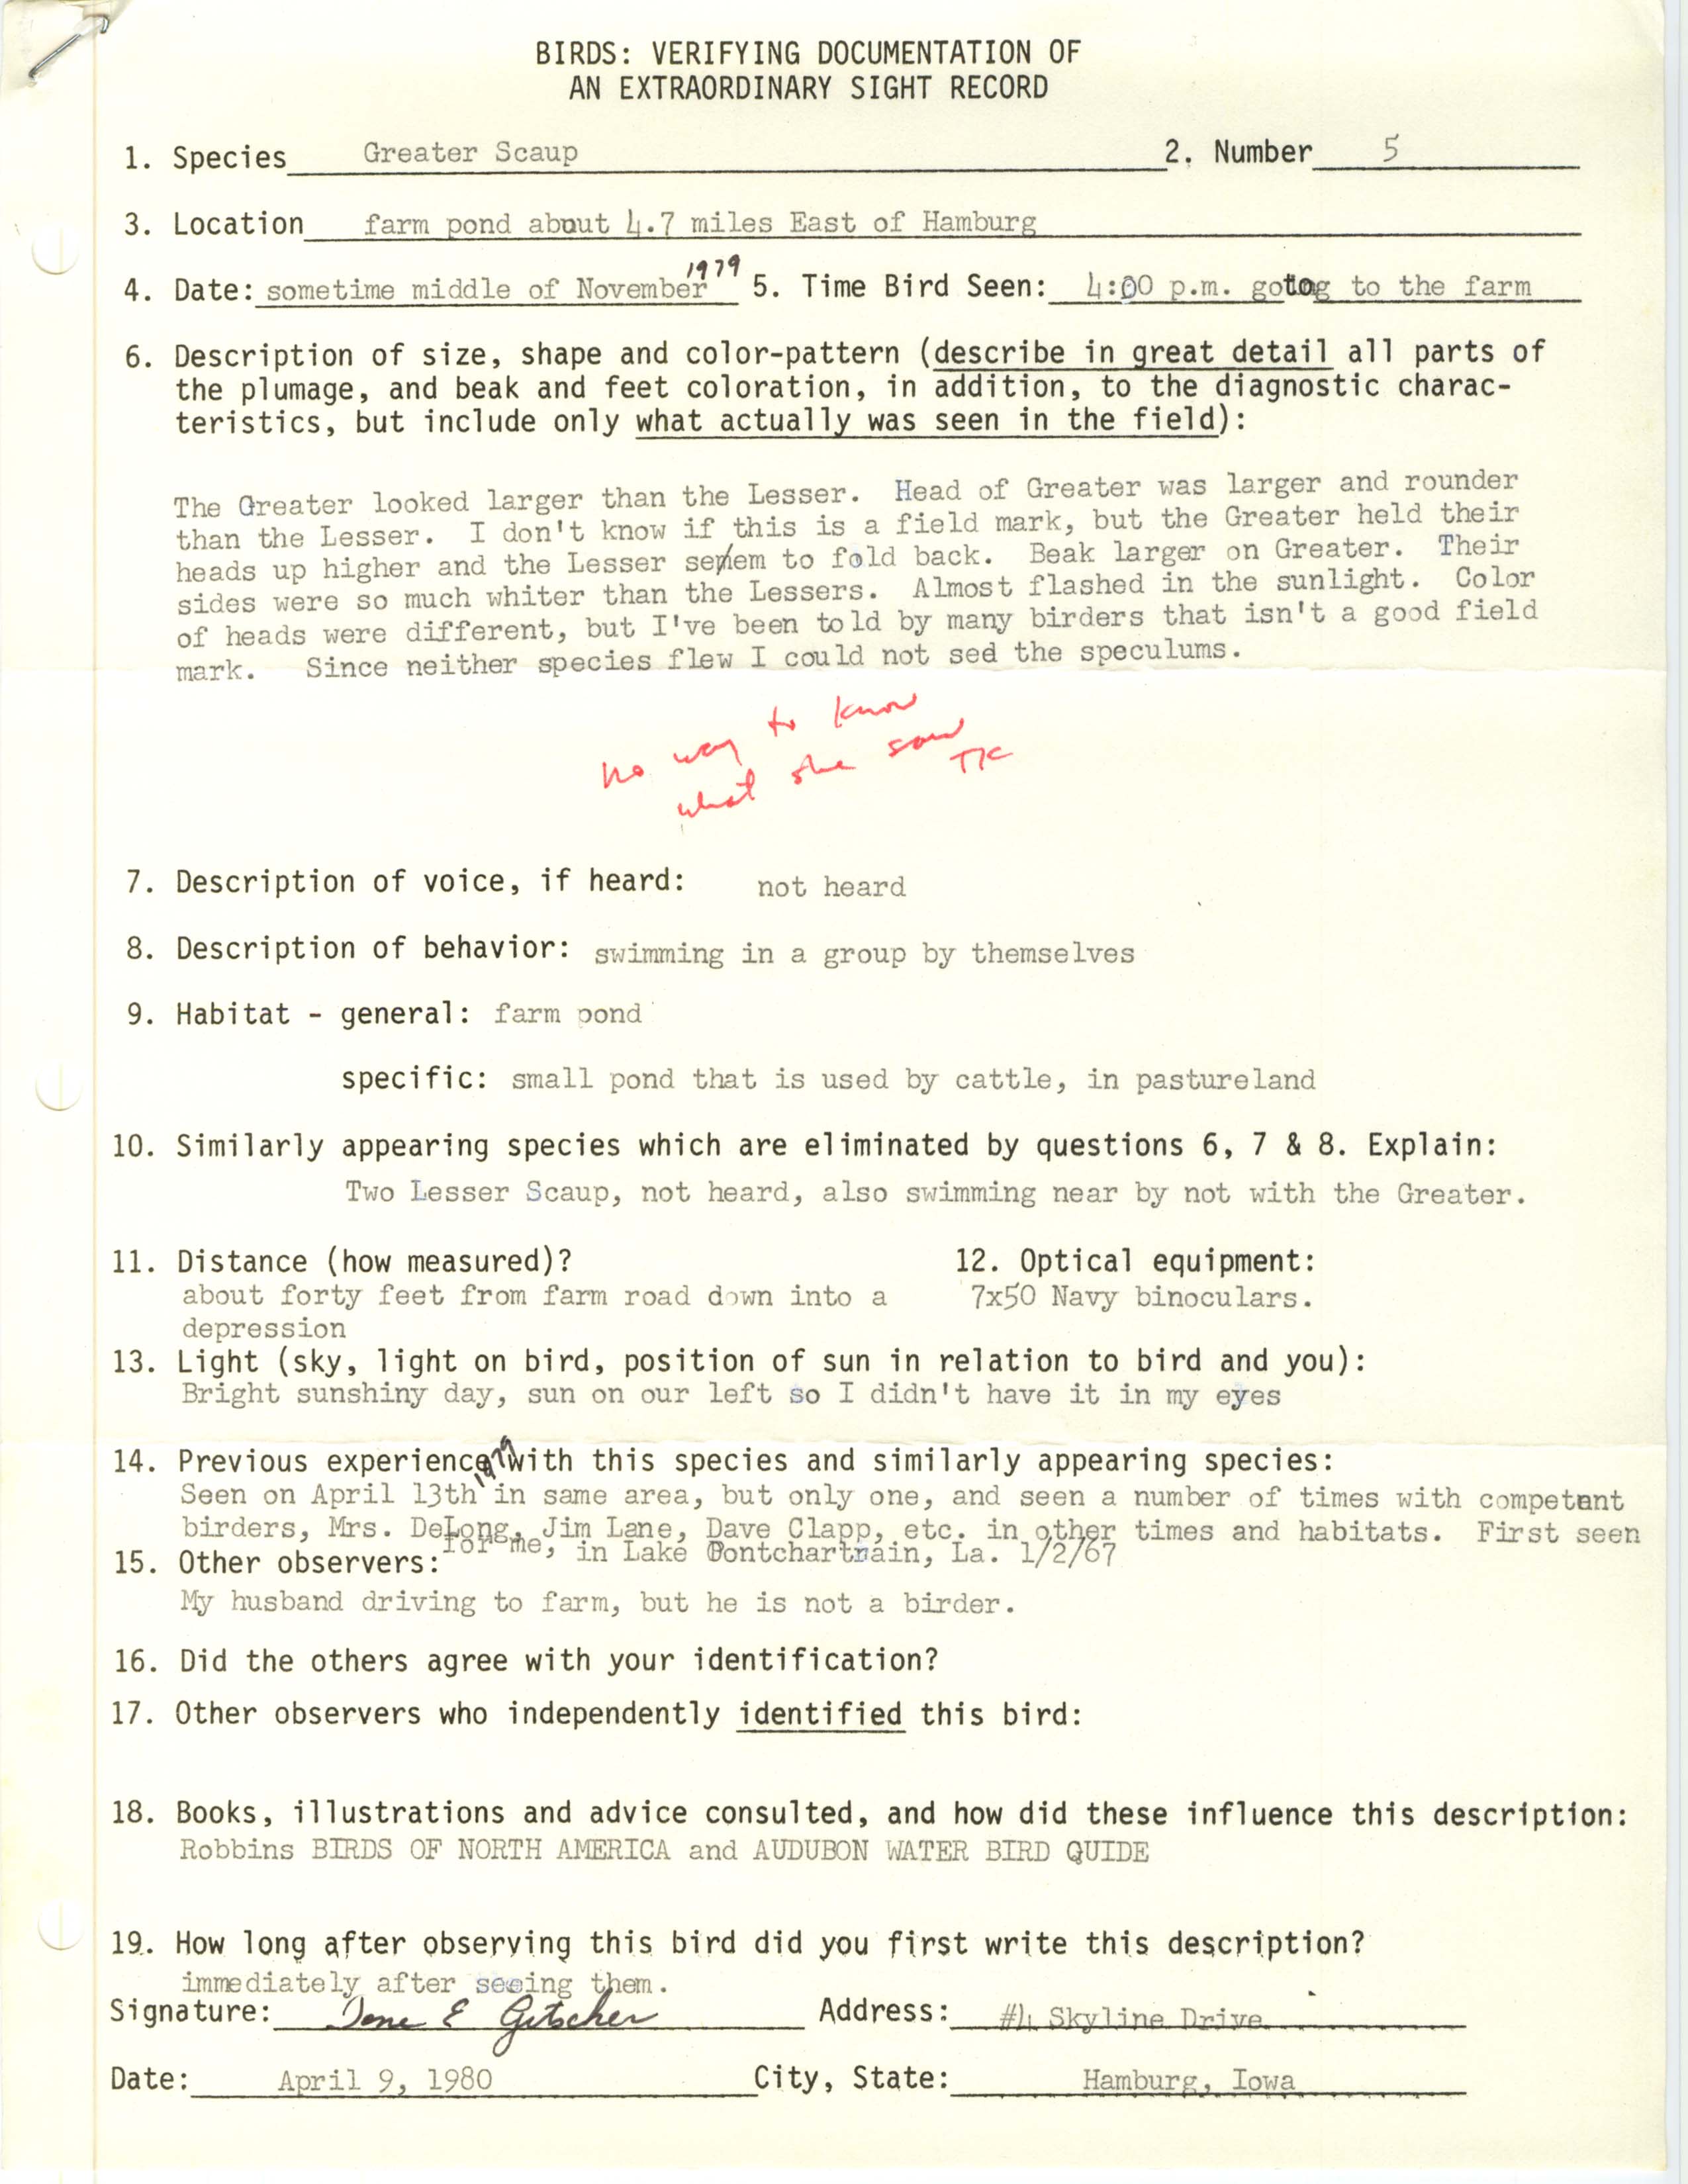 Rare bird documentation form for Greater Scaup at Hamburg, 1979